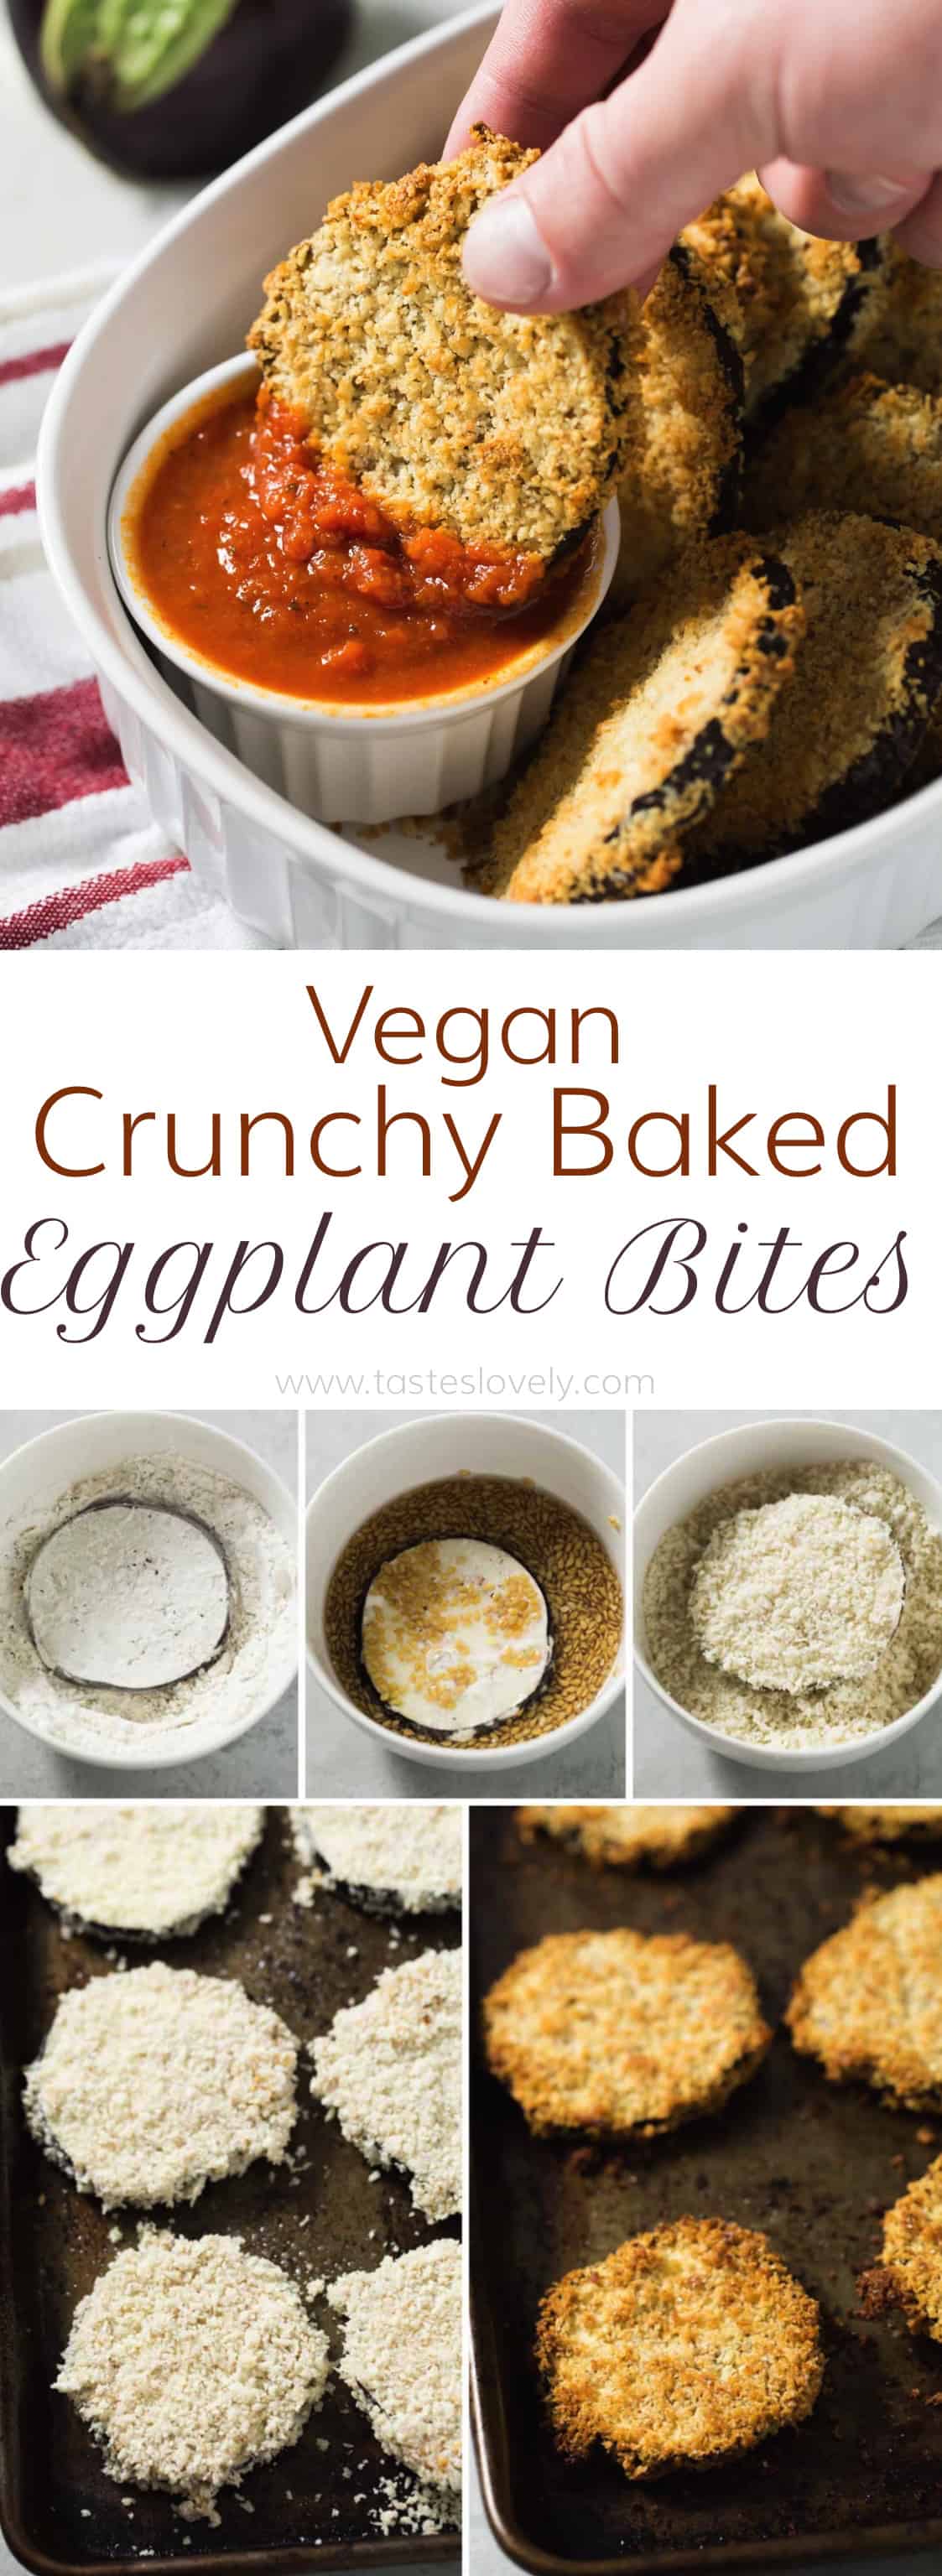 Vegan Crunchy Baked Eggplant Bites